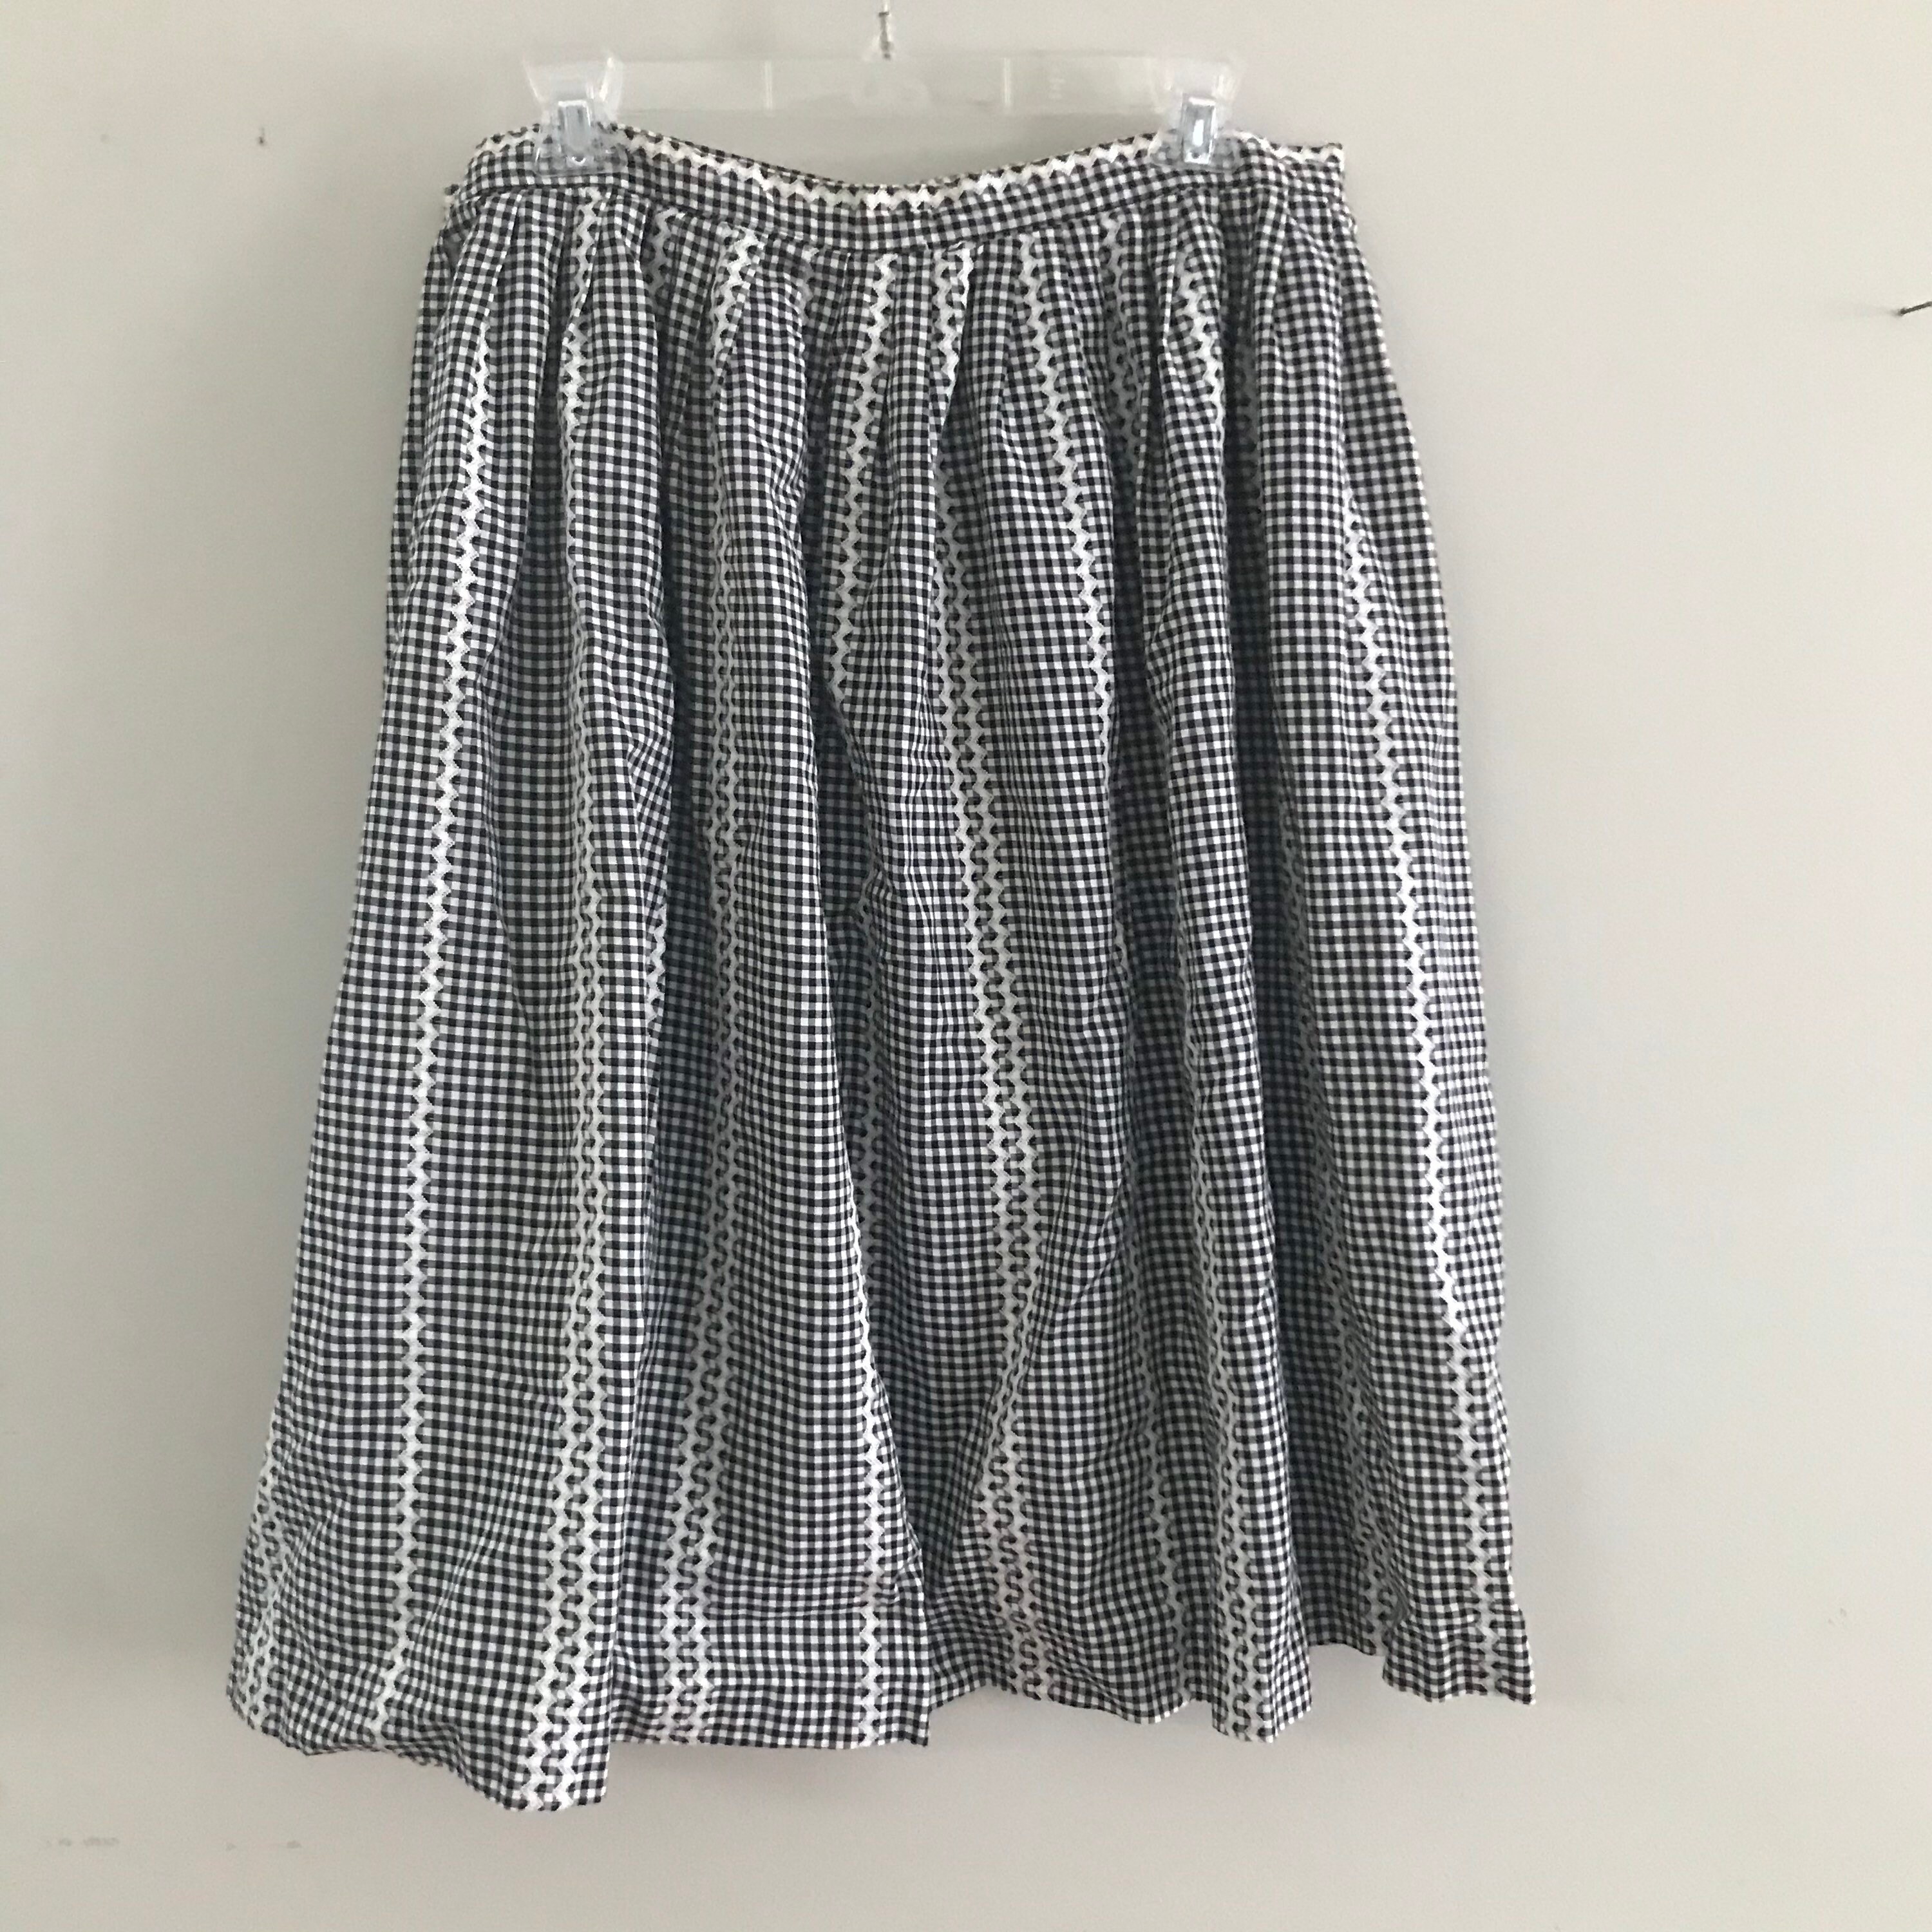 Vintage Black and White Checkered Skirt Size Medium Pleated | Etsy